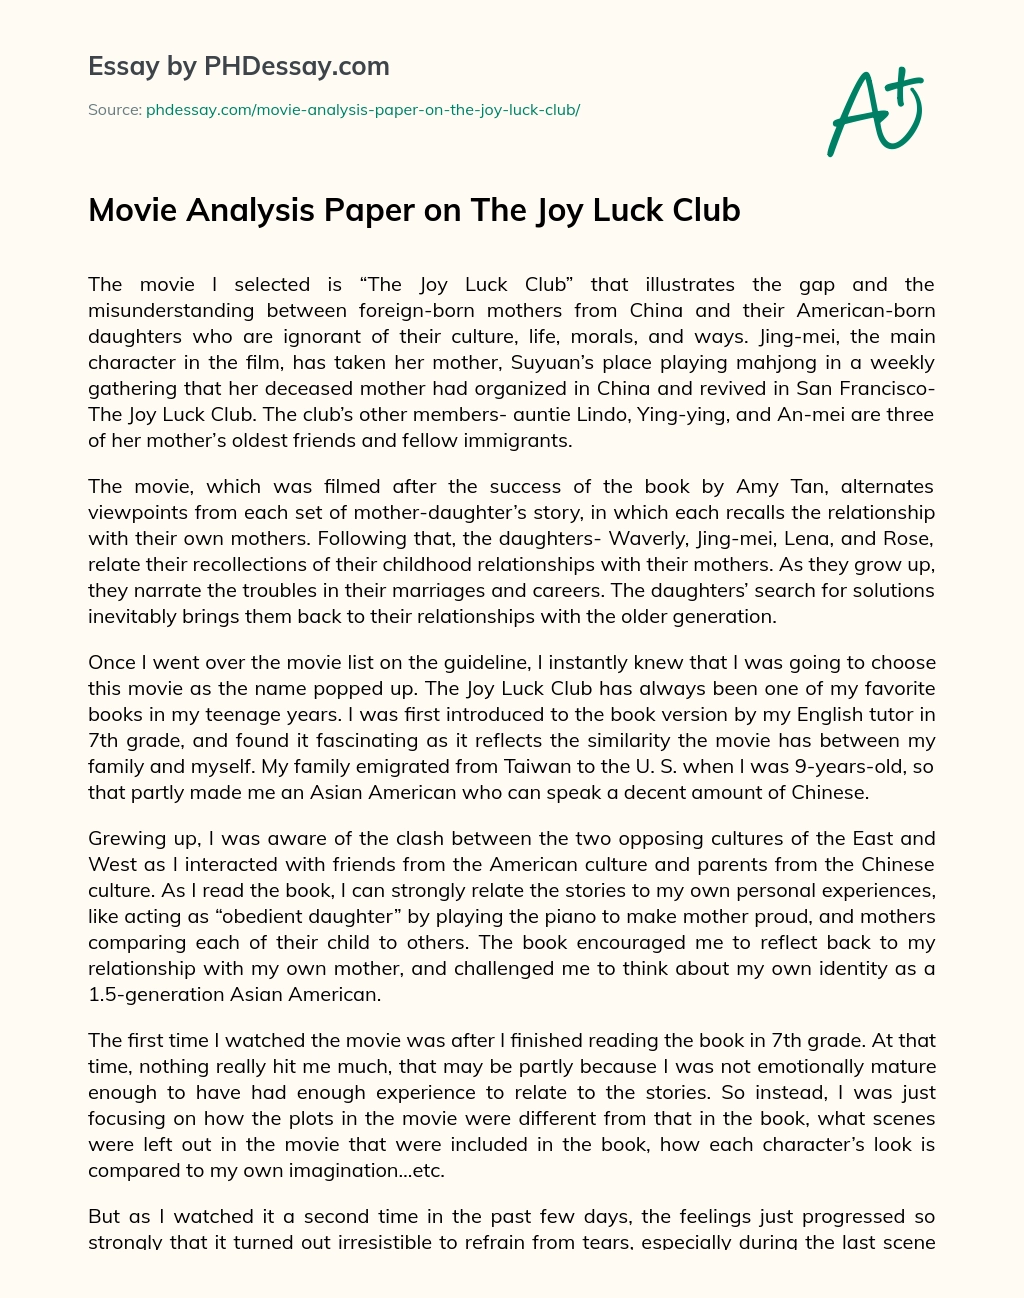 Movie Analysis Paper on The Joy Luck Club essay